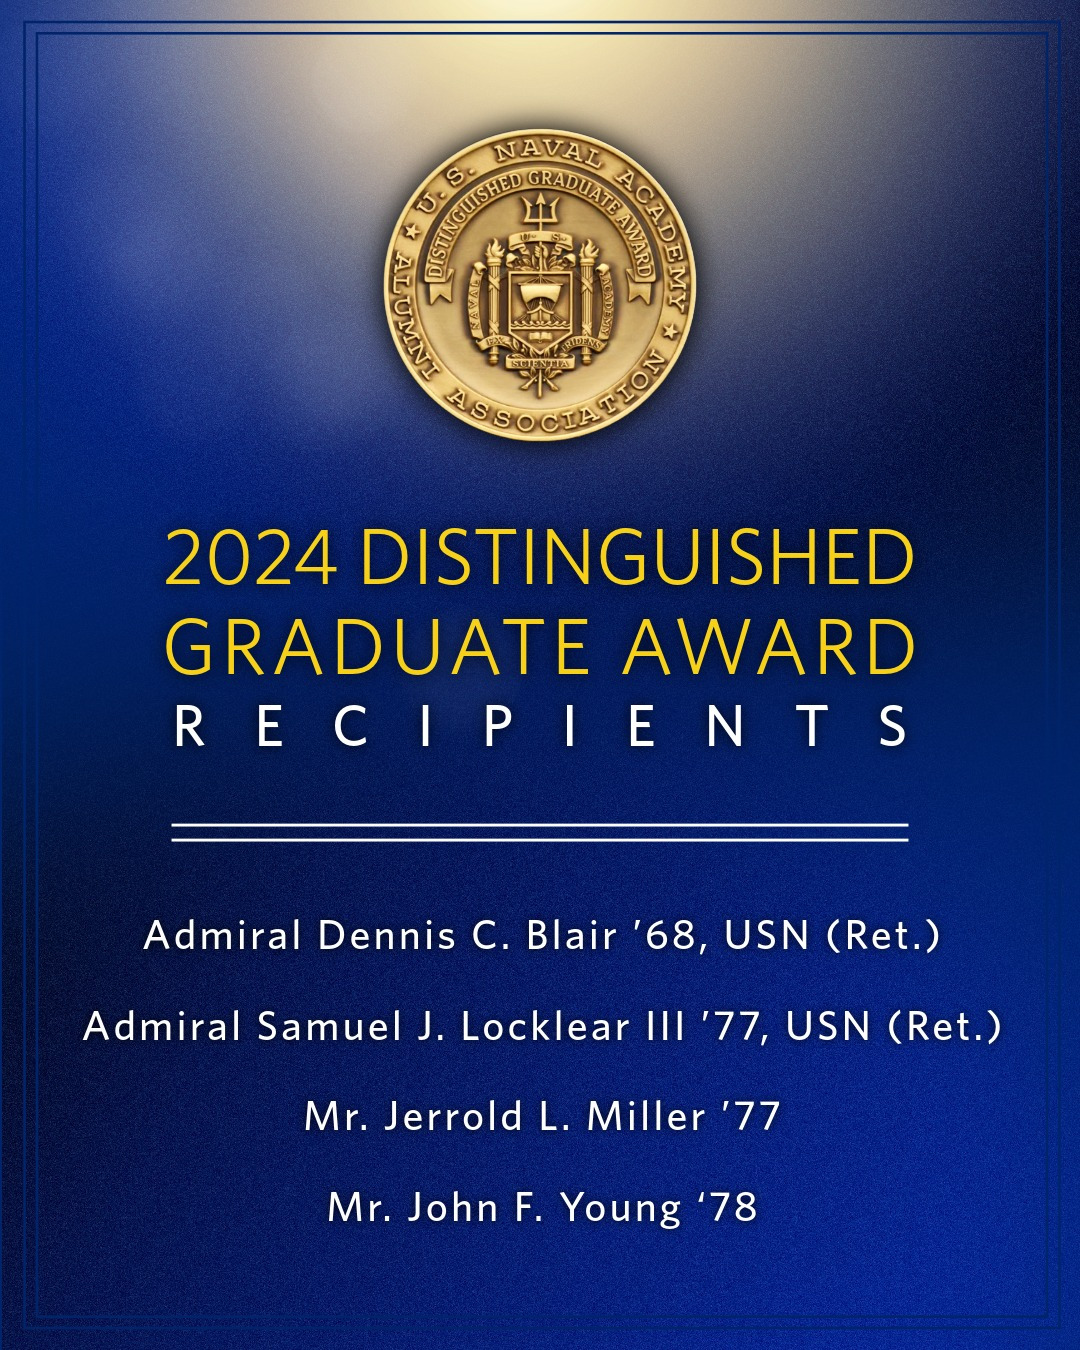 U.S. Naval Academy Alumni Association Announces 2024 Distinguished